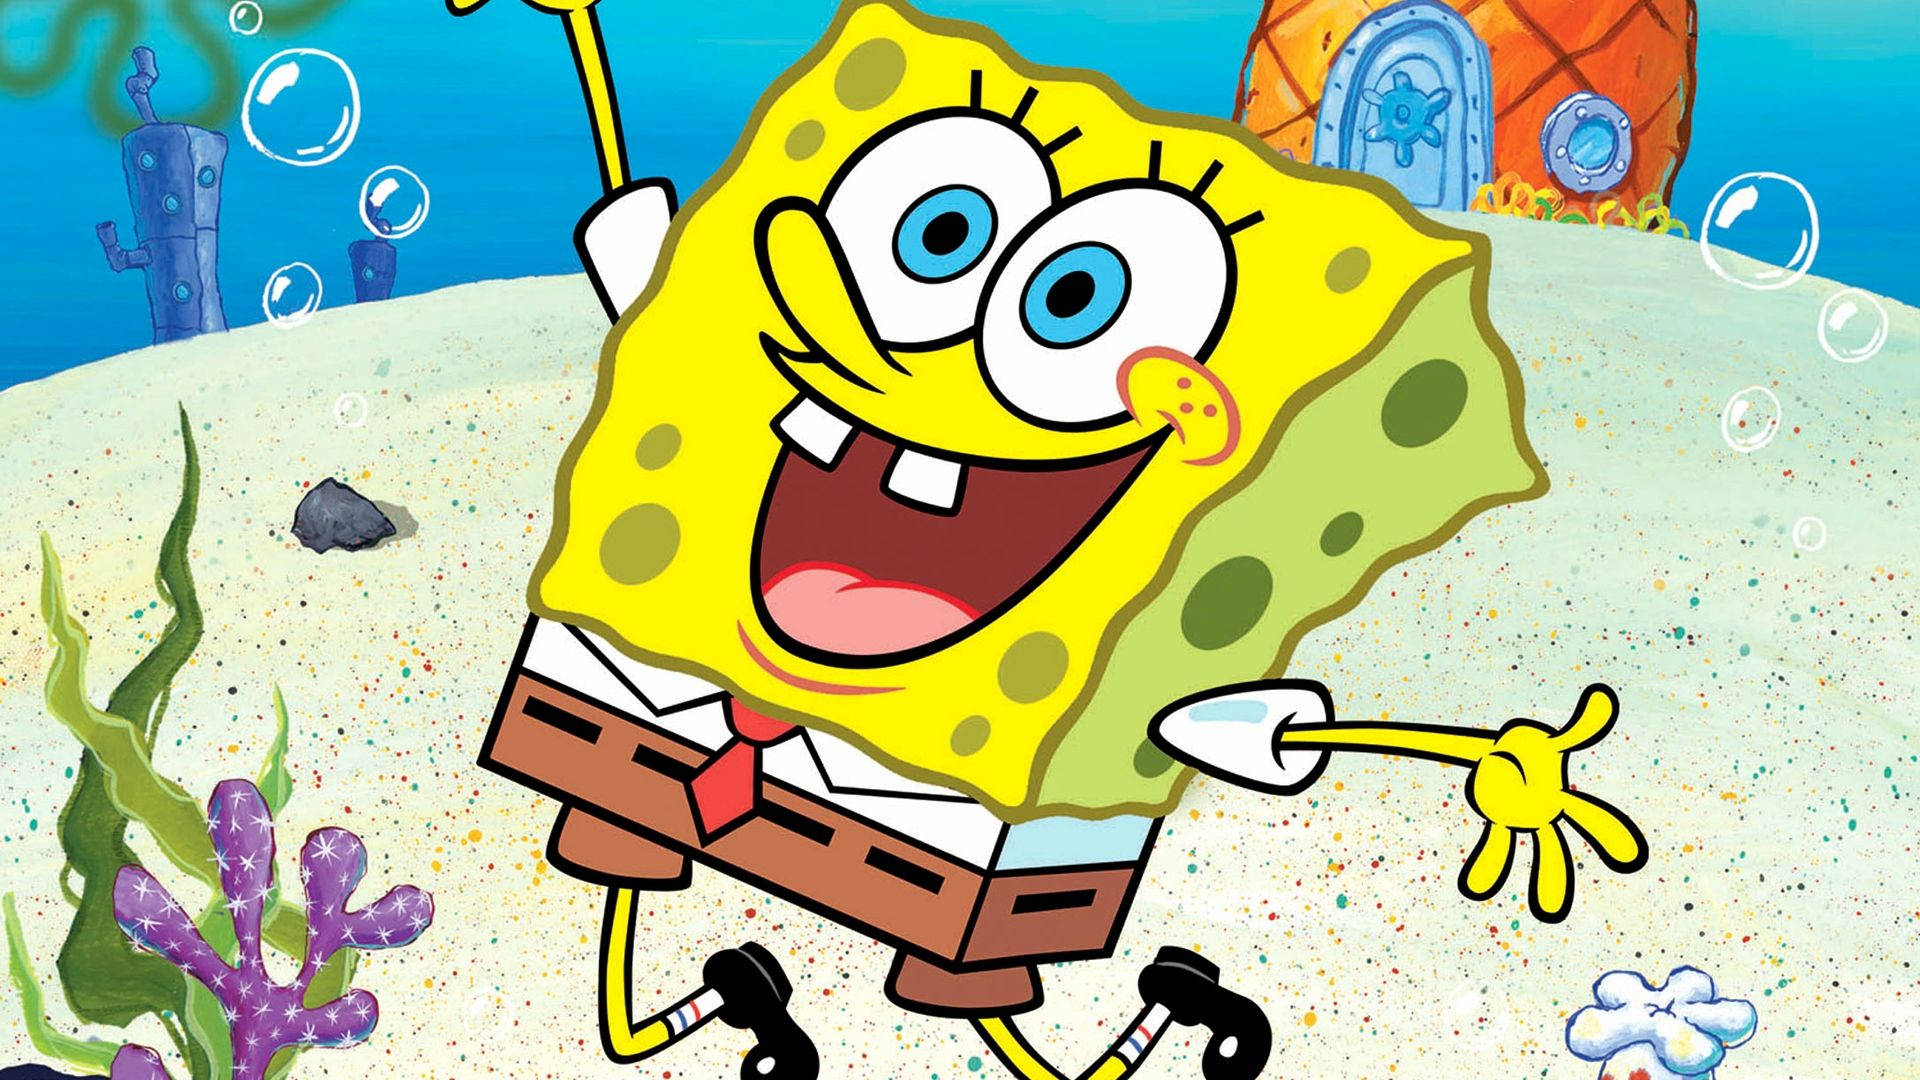 Spongebob hình nền  SpongeBob SquarePants hình nền 40604031  fanpop